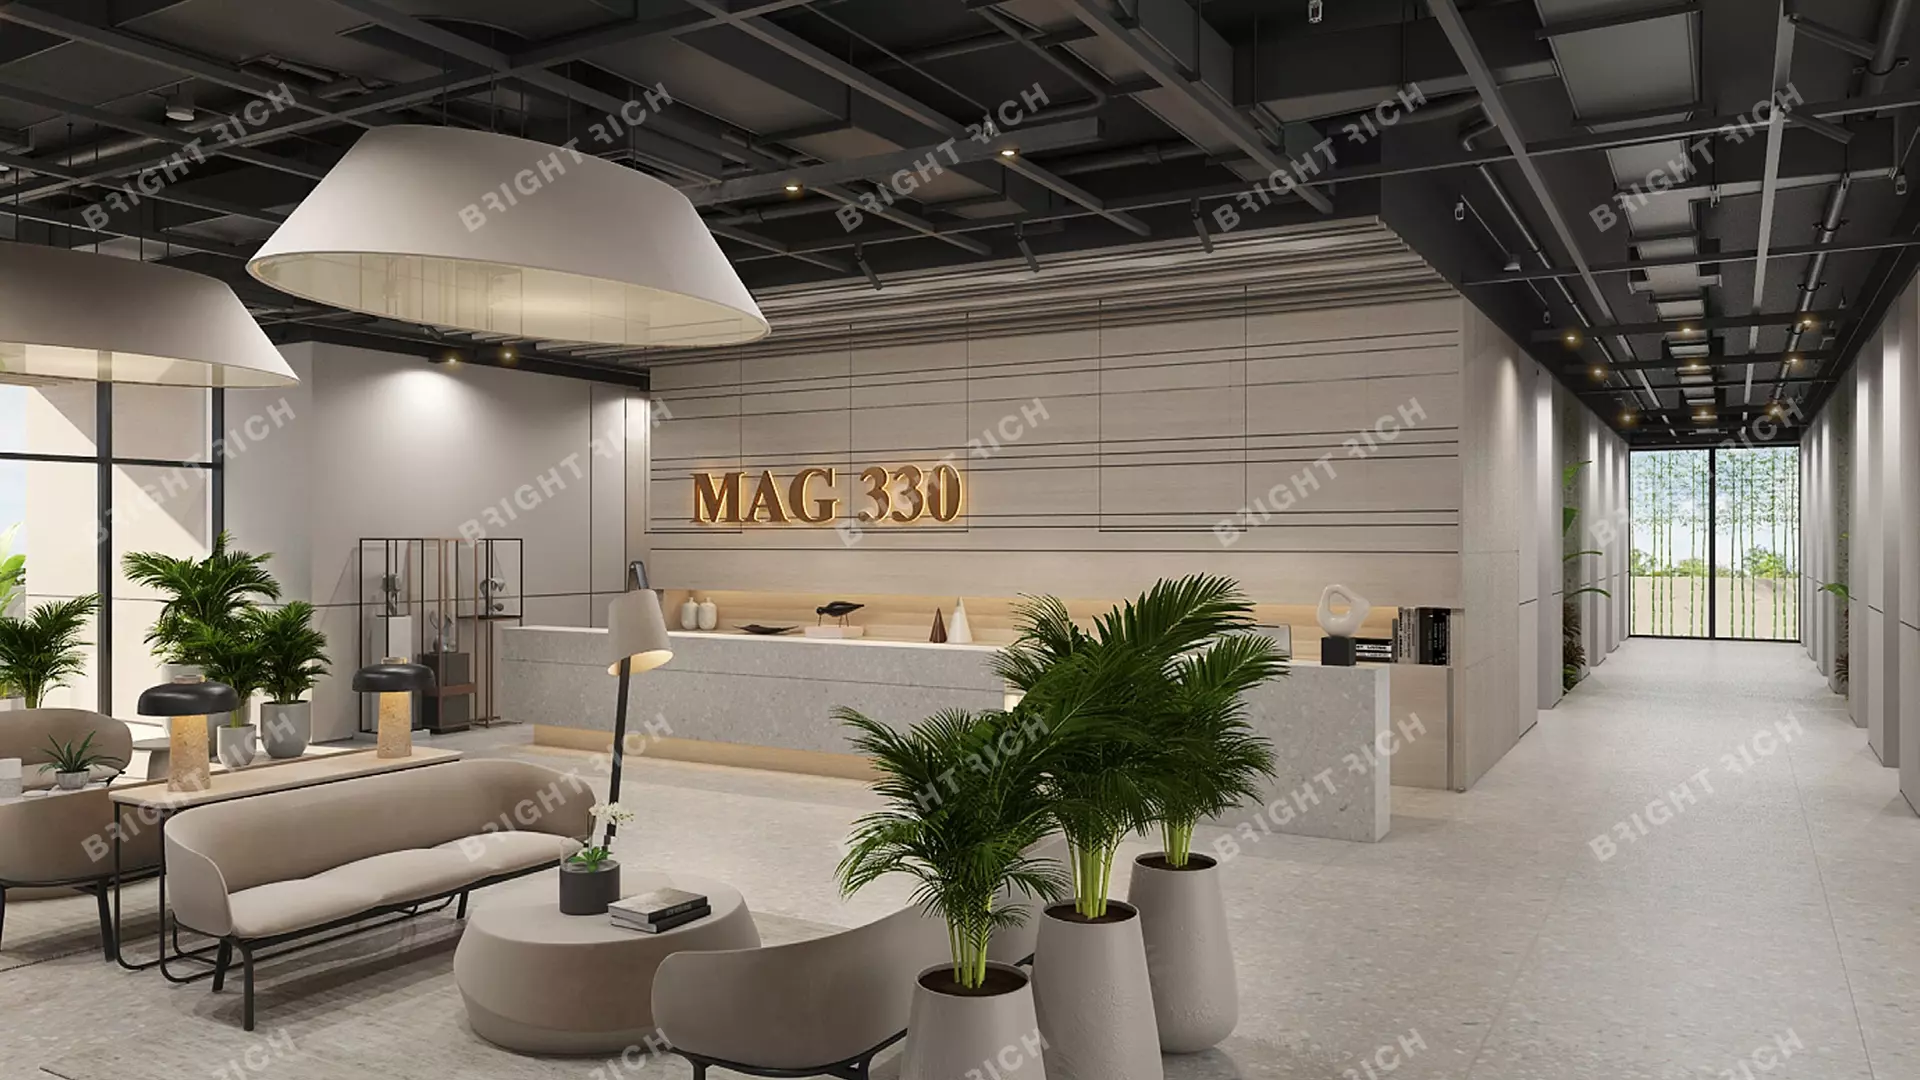 MAG 330, апарт-комплекс в Дубае - 4